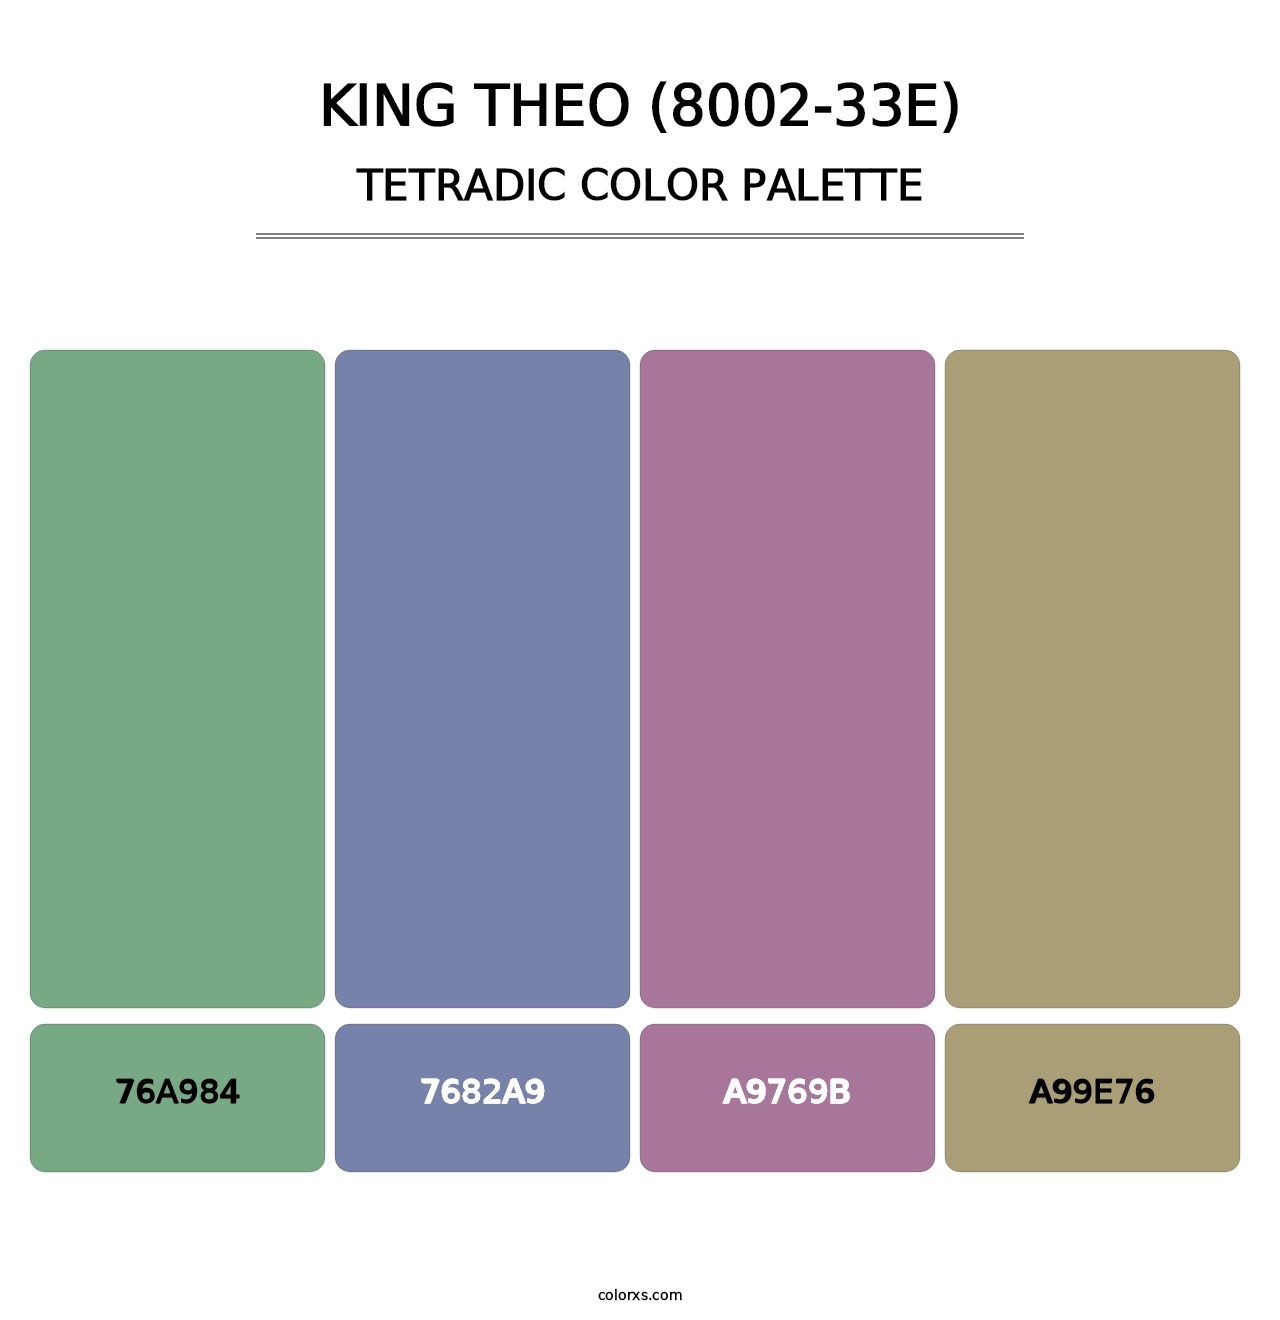 King Theo (8002-33E) - Tetradic Color Palette